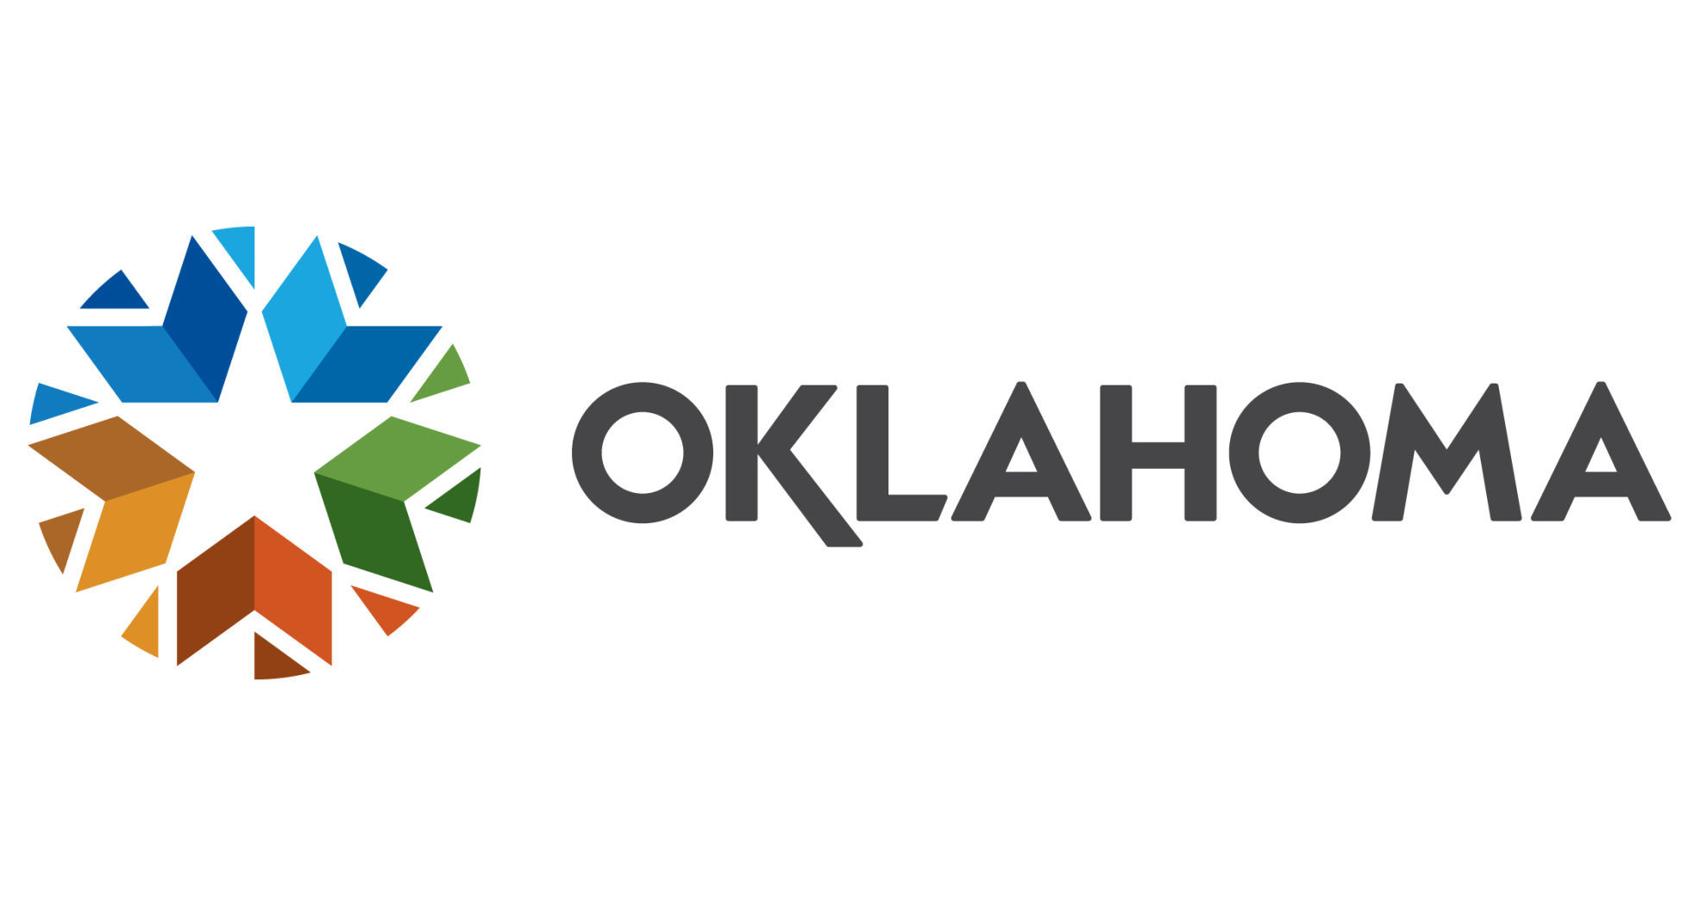 Oklahoma’s new logo includes “Imagine That” as tagline